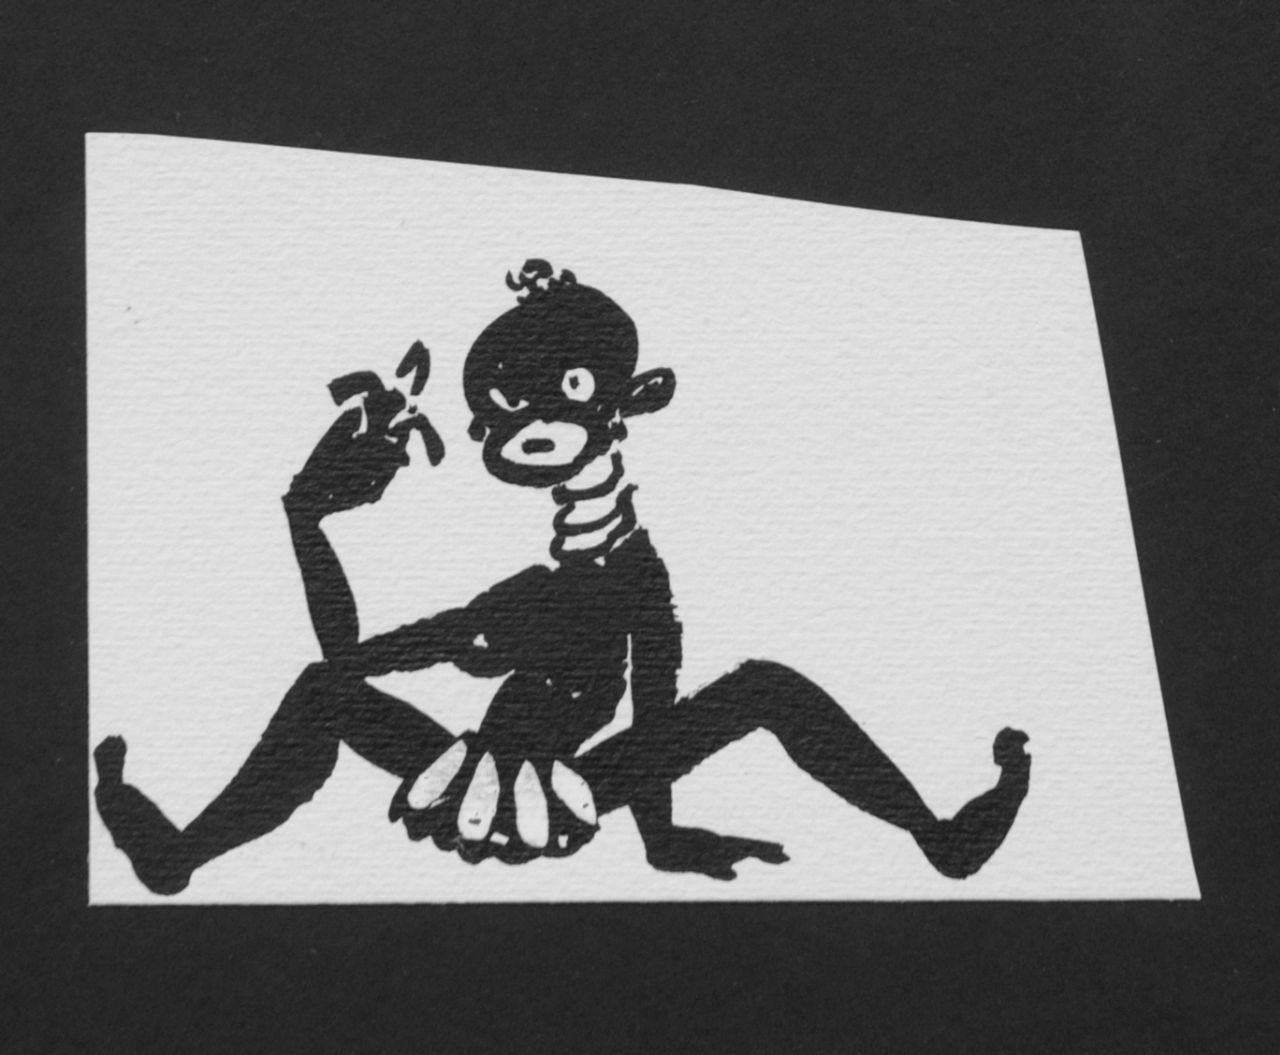 Oranje-Nassau (Prinses Beatrix) B.W.A. van | Beatrix Wilhelmina Armgard van Oranje-Nassau (Prinses Beatrix), Sitting negro, pencil and black ink on paper 8.5 x 12.0 cm, executed August 1960